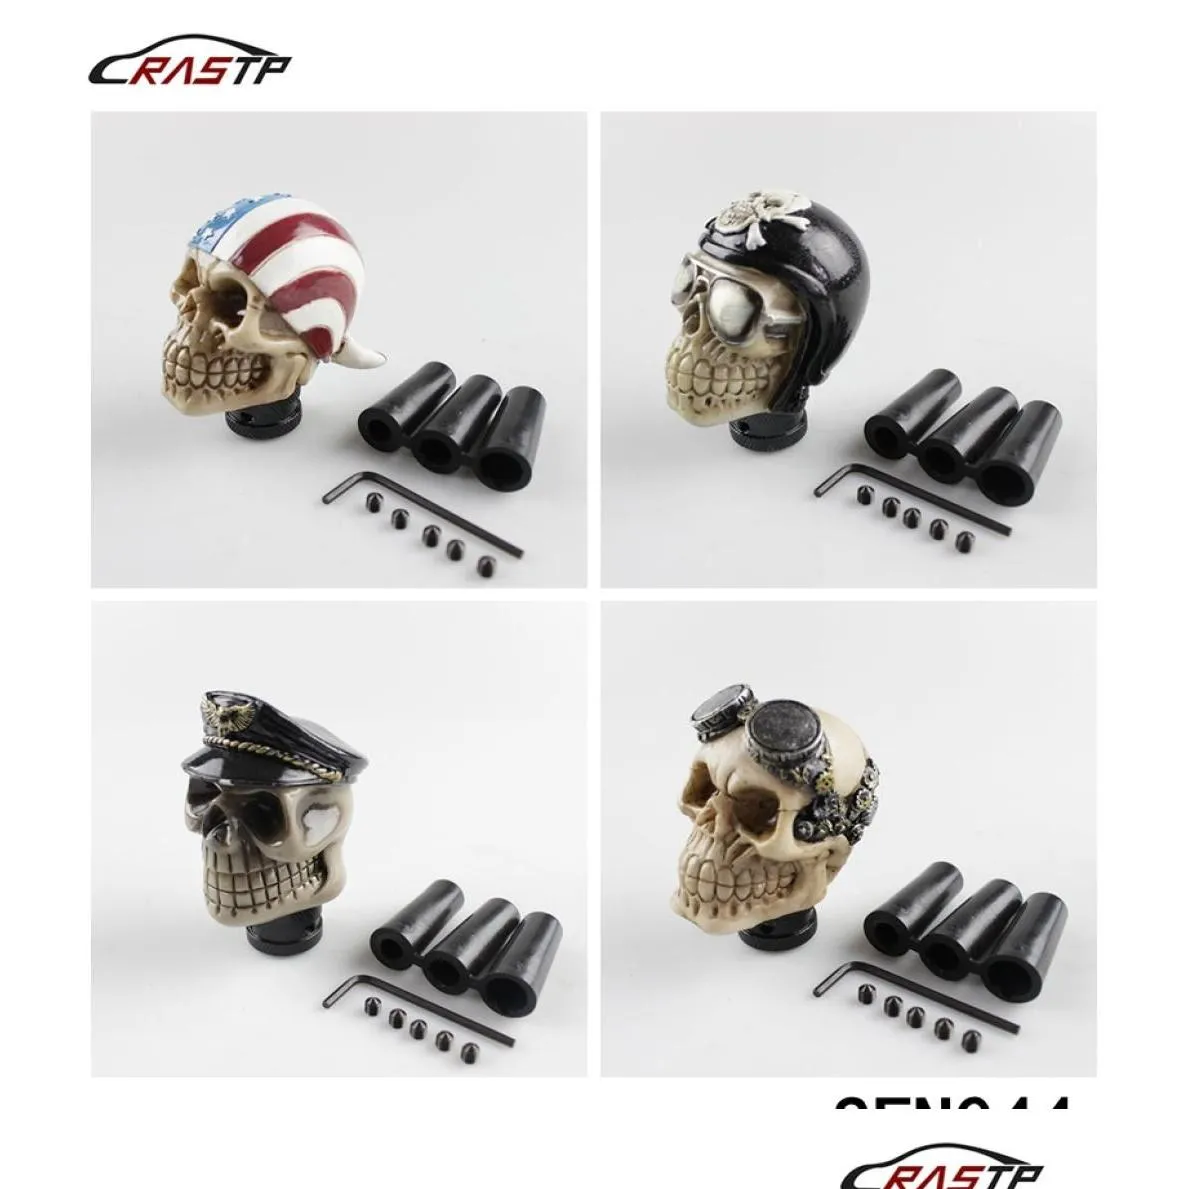 rastp racing car gear shift knob devil head knob modified resin knob soldier skull with hat and glasses lssfn0442797872